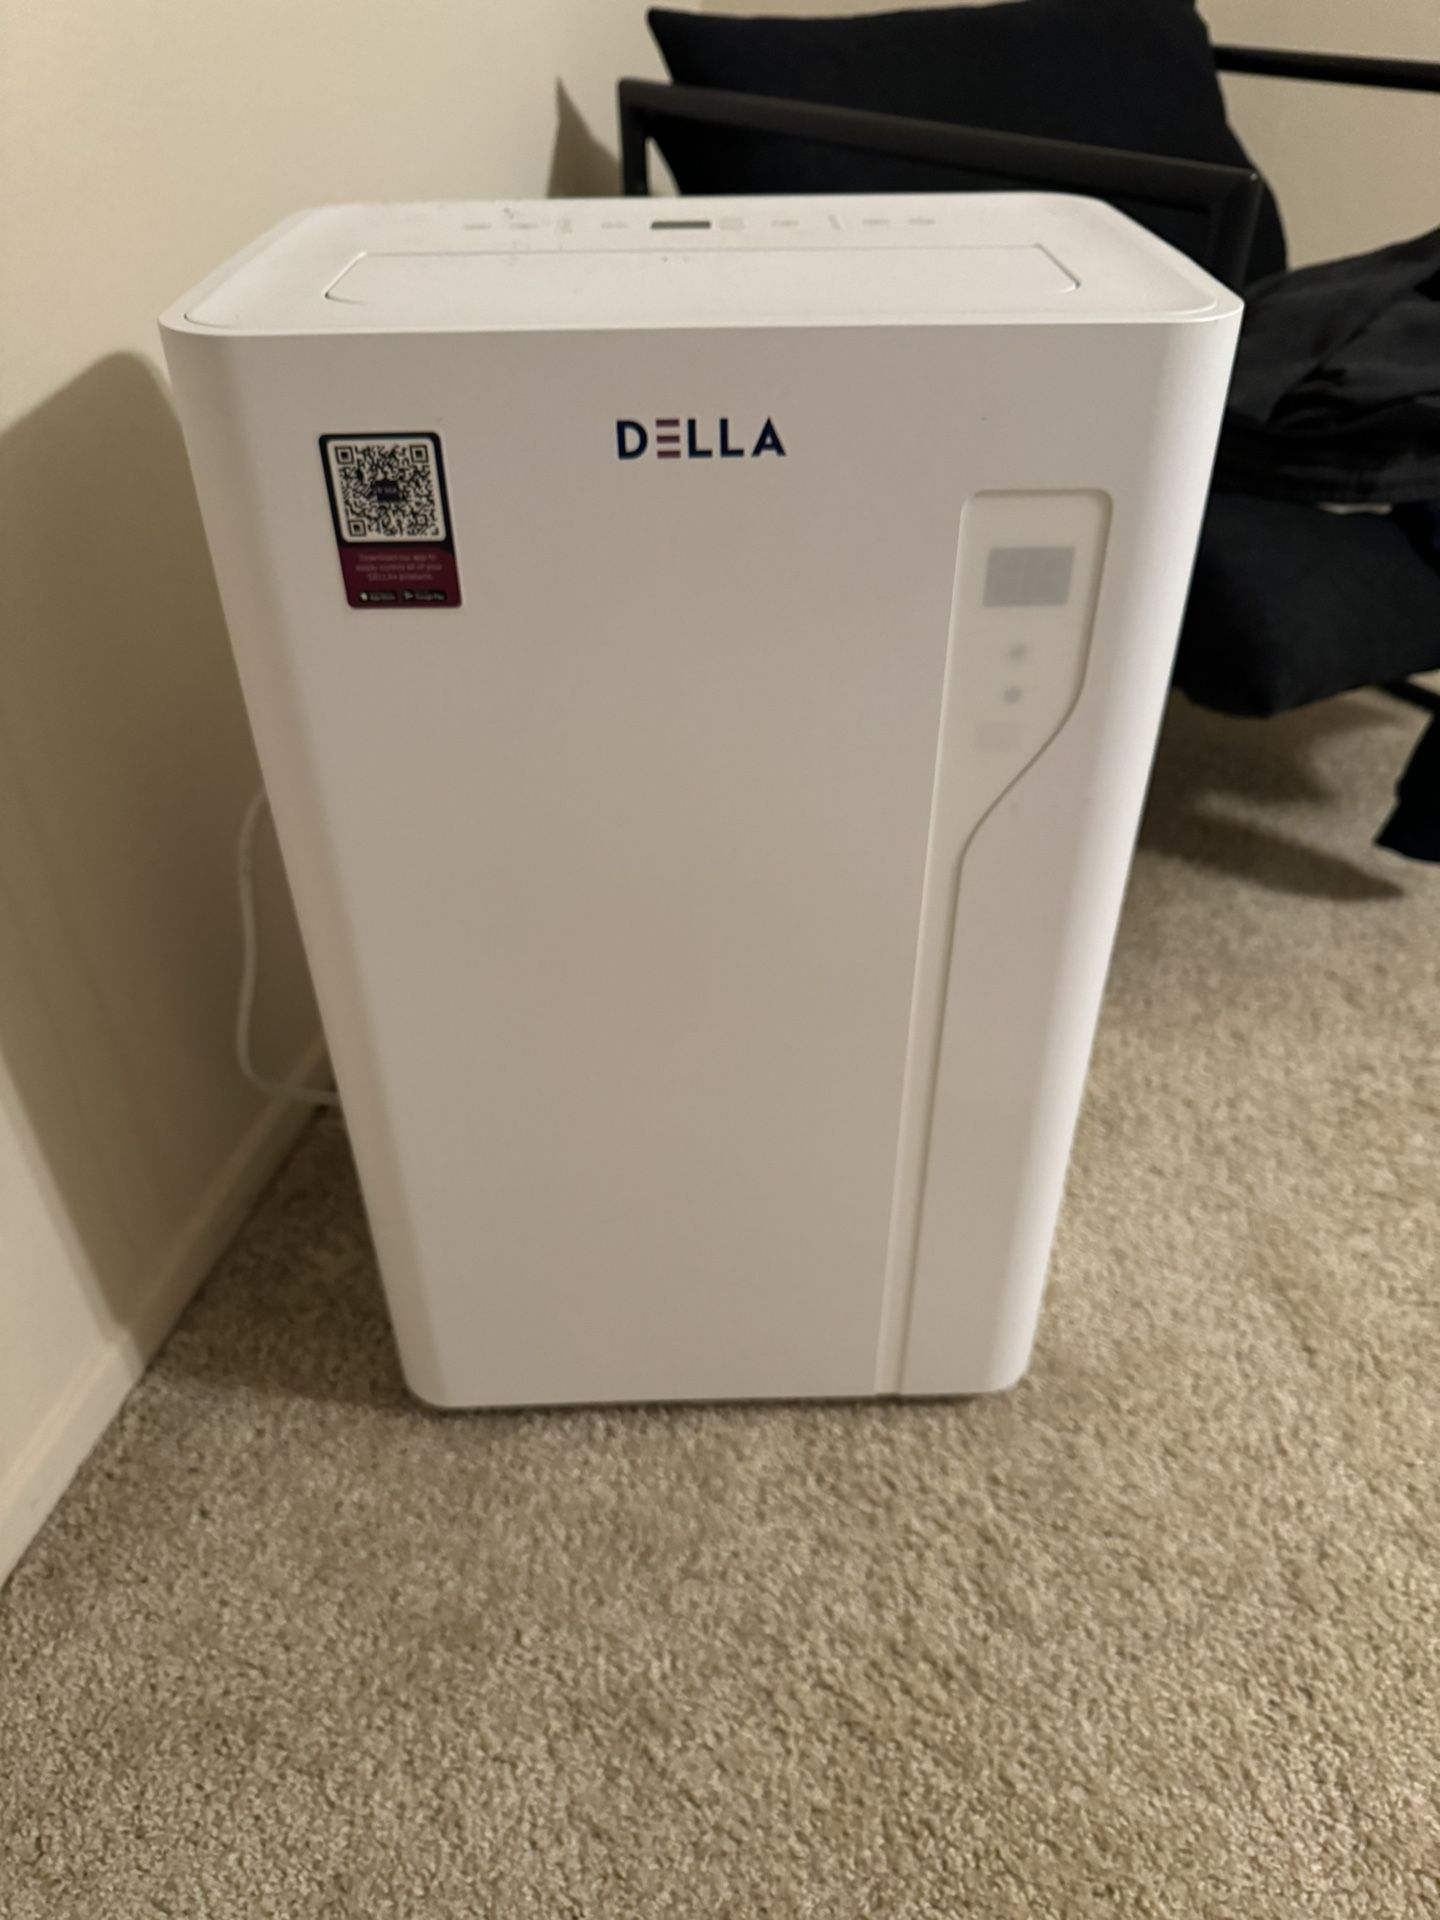 DELLA 14000 BTU Portable Air Conditioner